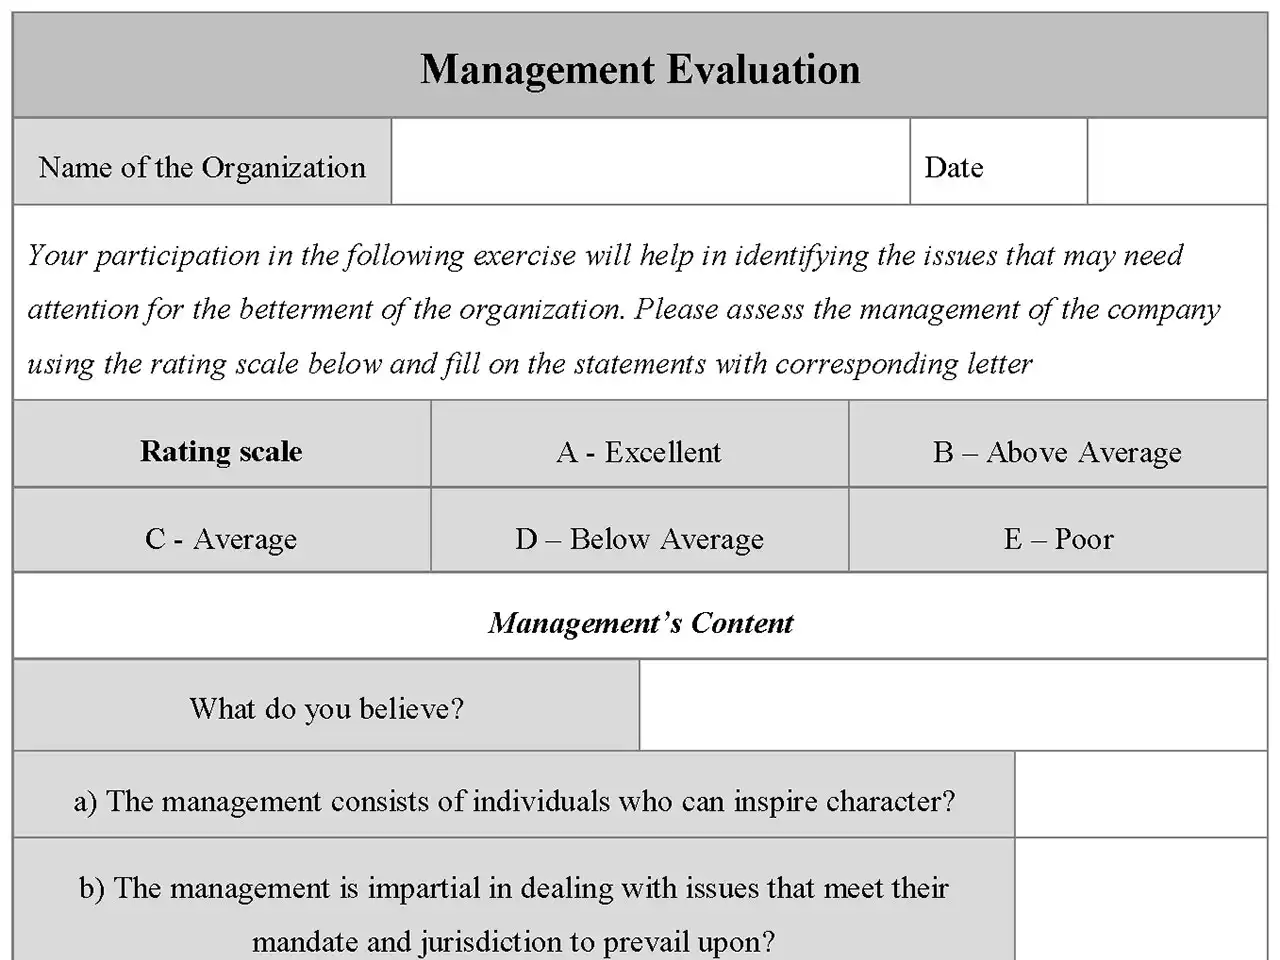 Management Evaluation Form